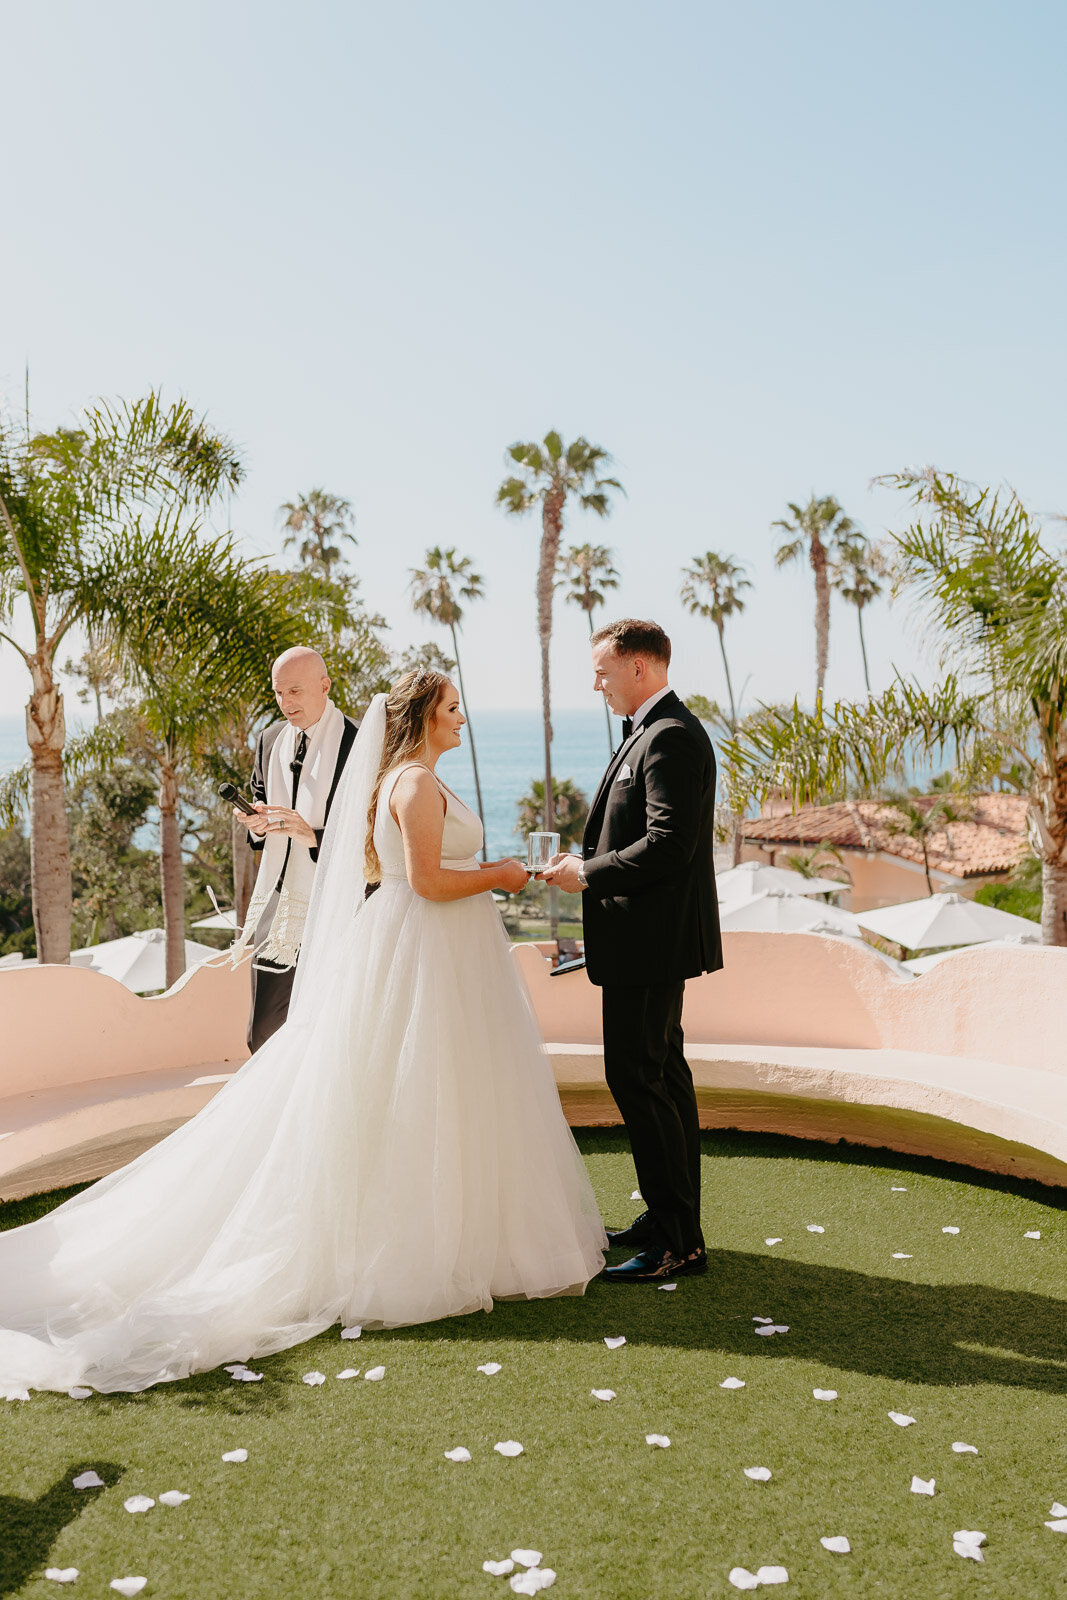 Lexx-Creative-La-Valencia-Hotel-Disney-Princess-Wedding-39